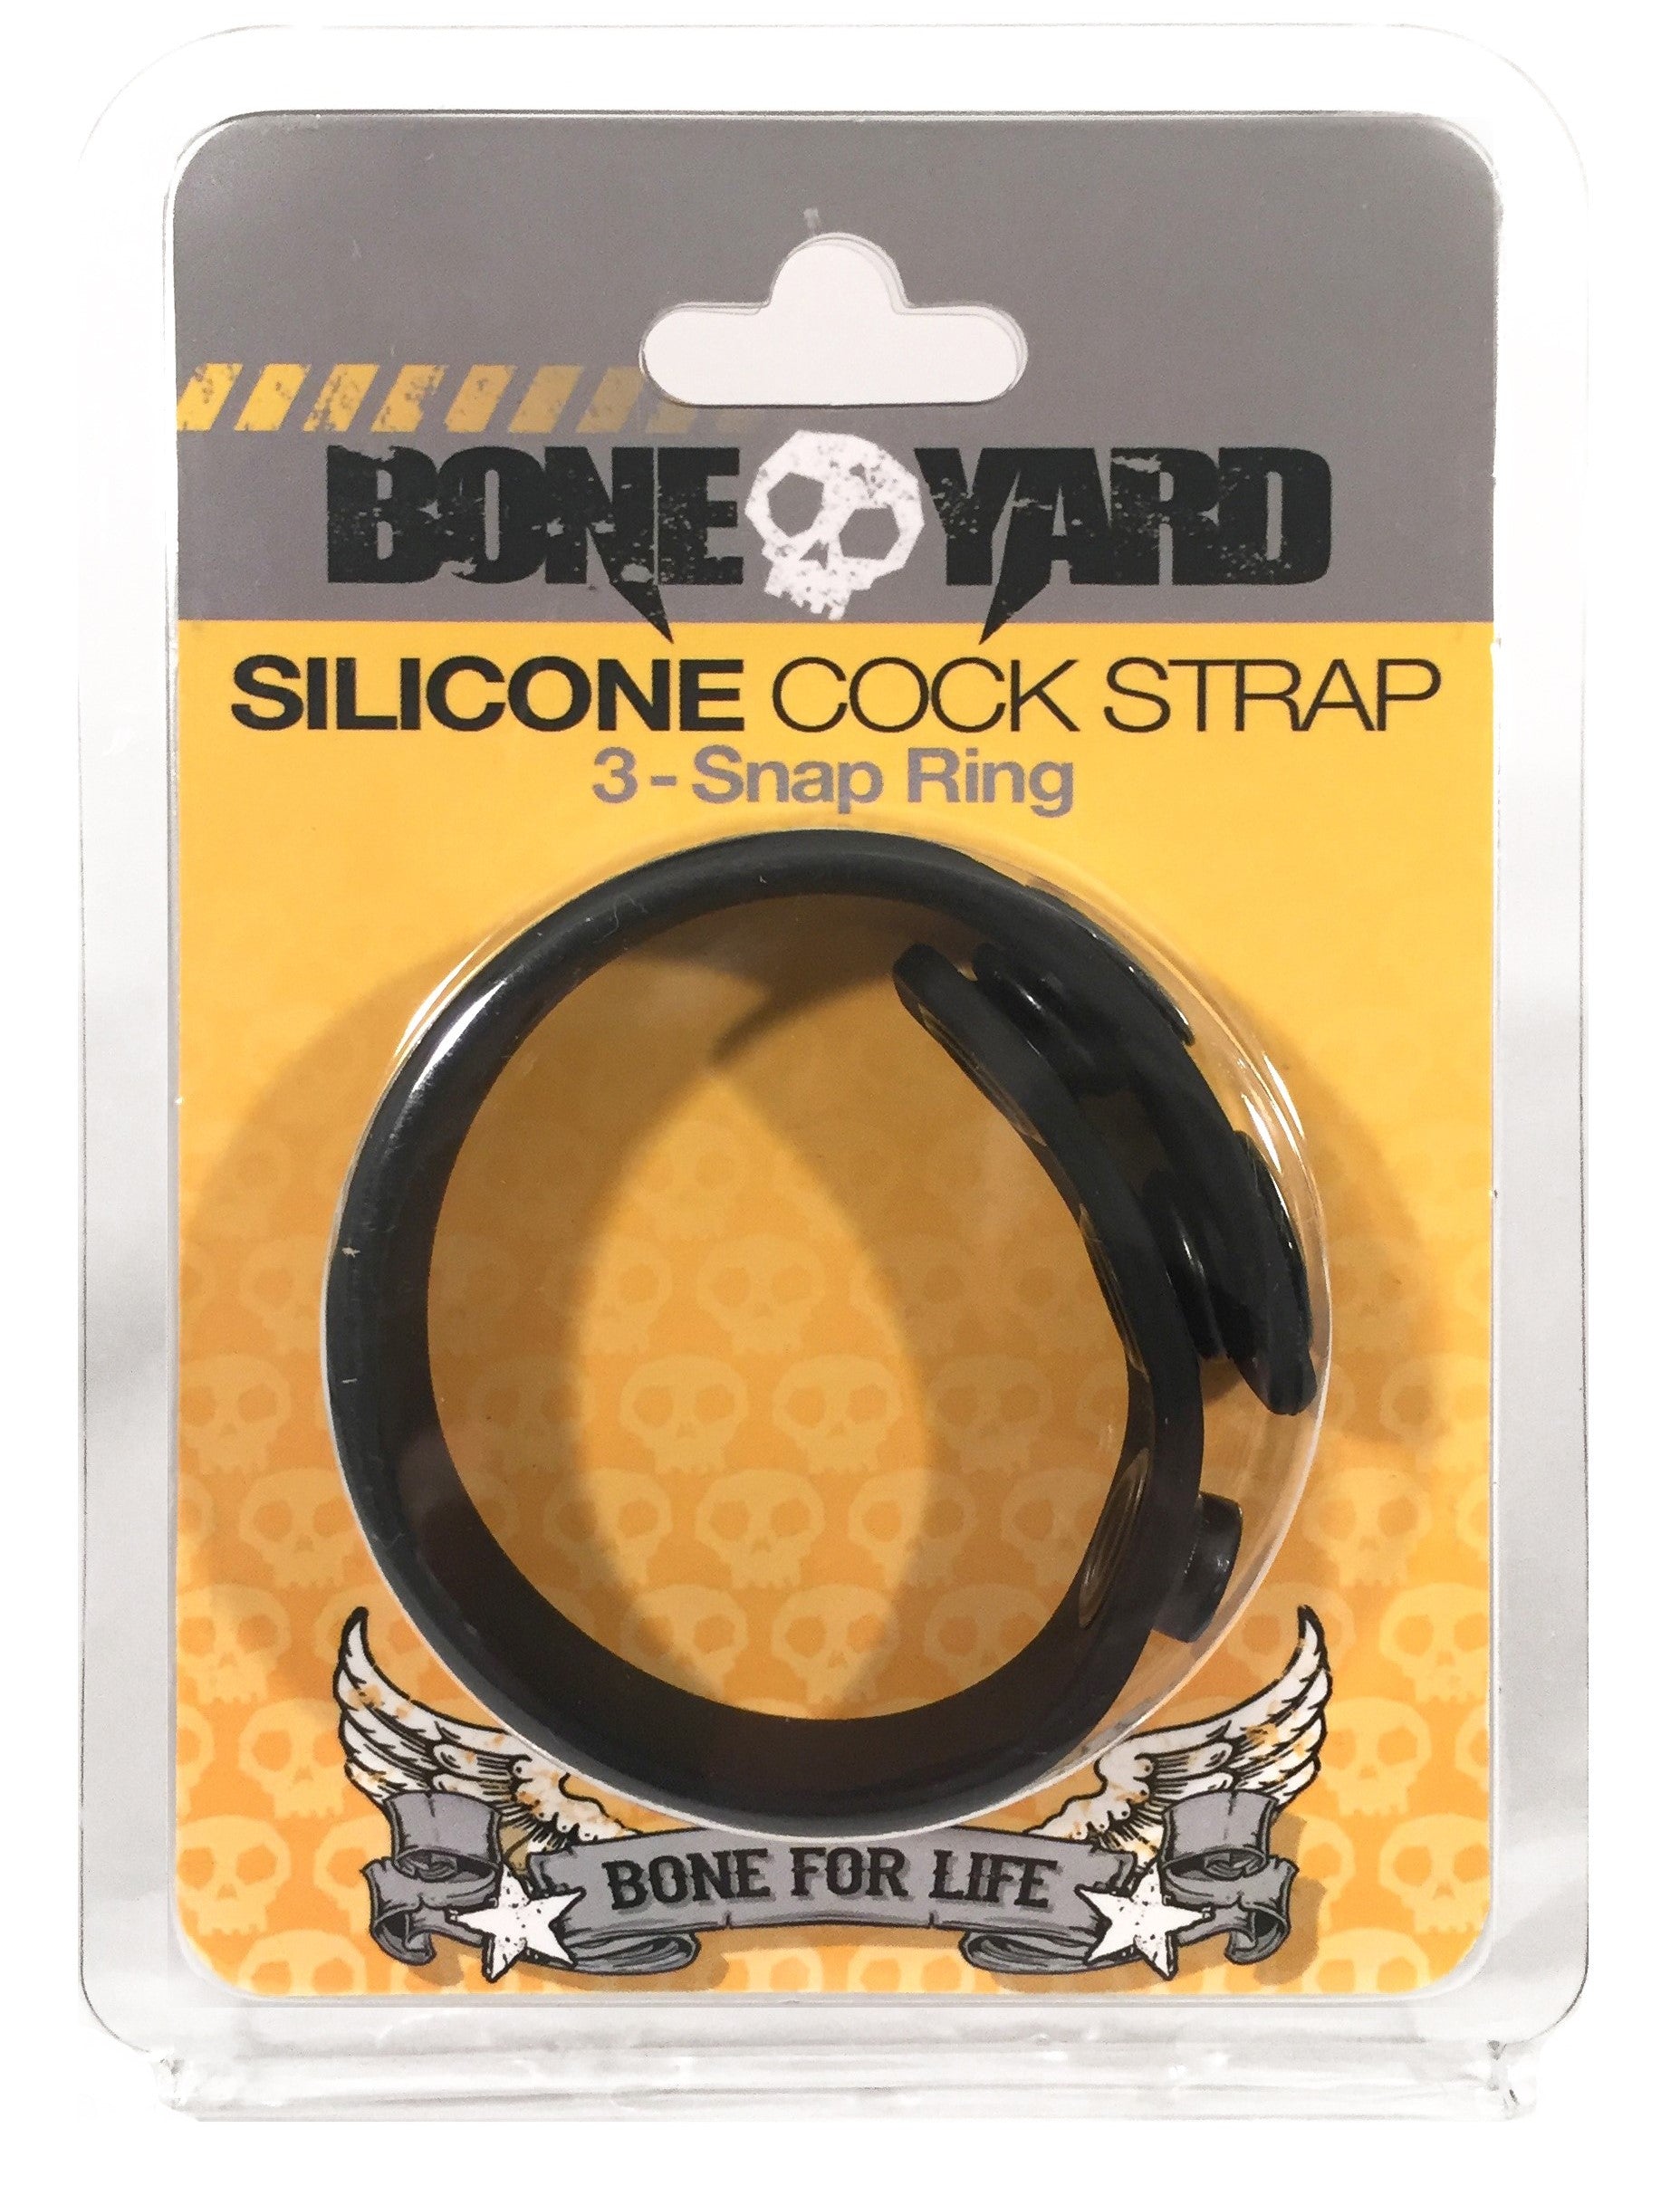 Boneyard Silicone Cock Strap - 3 Snap Cock Ring box - Black